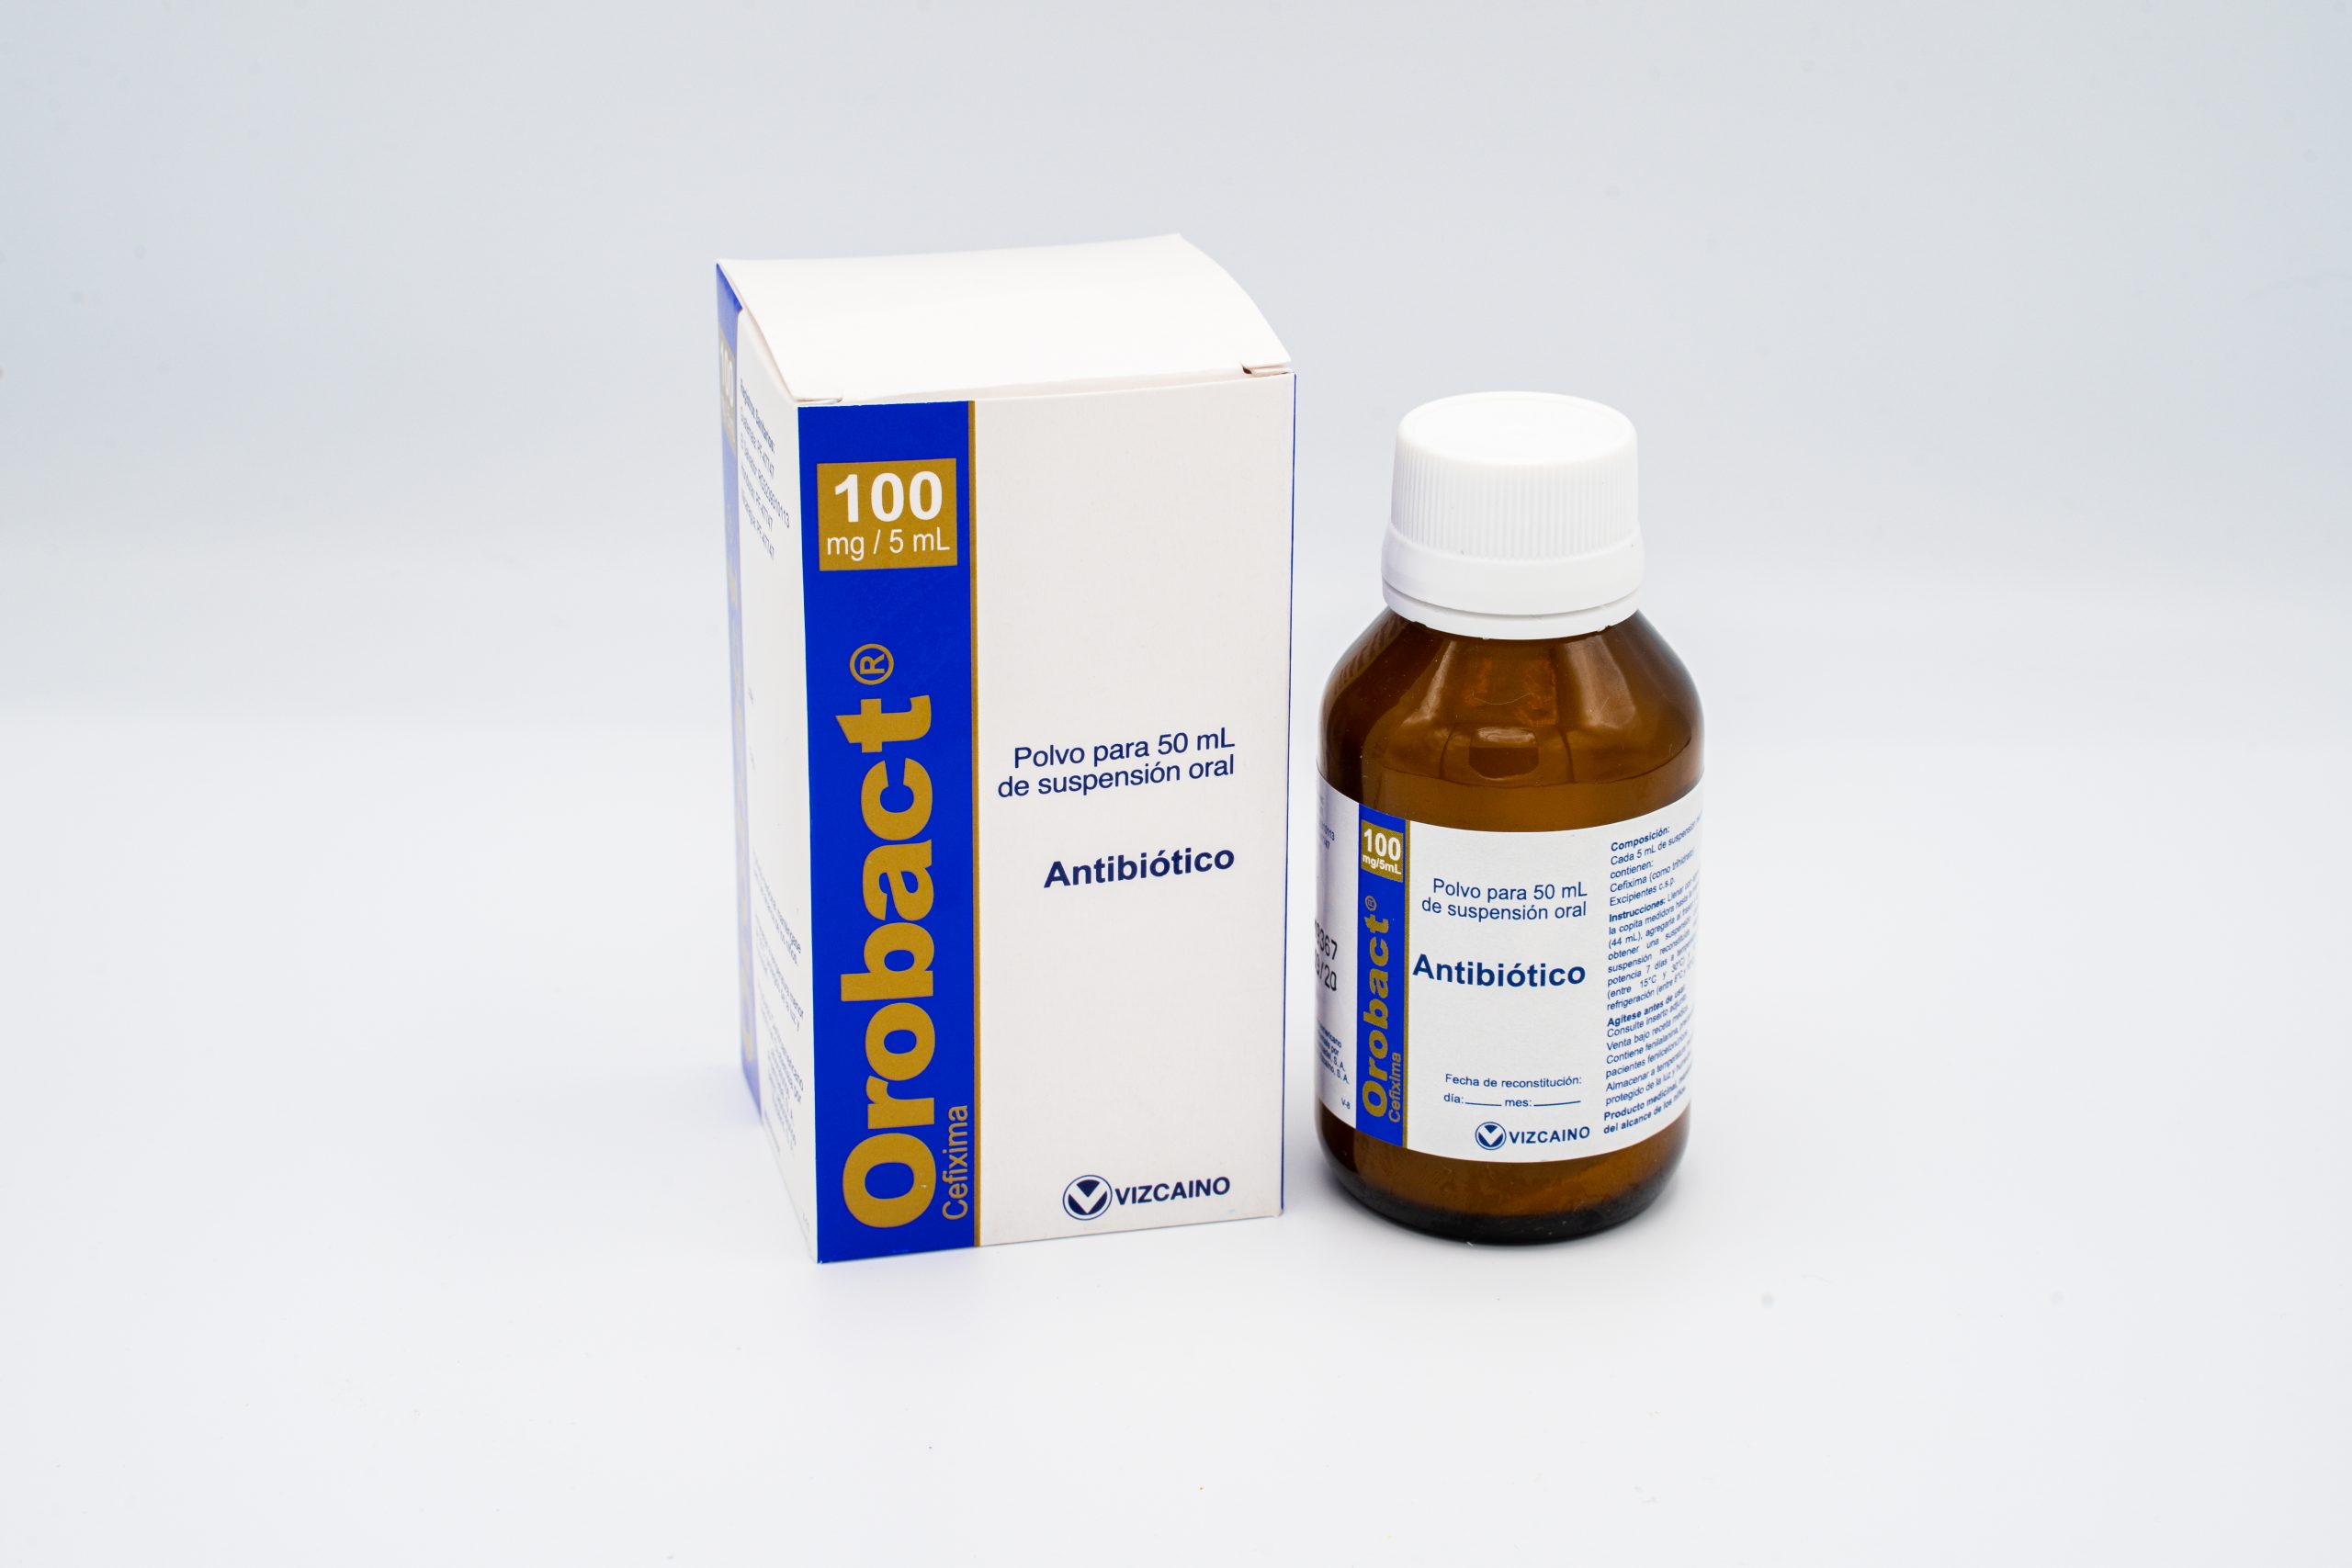 Orobact polvo para suspensión oral